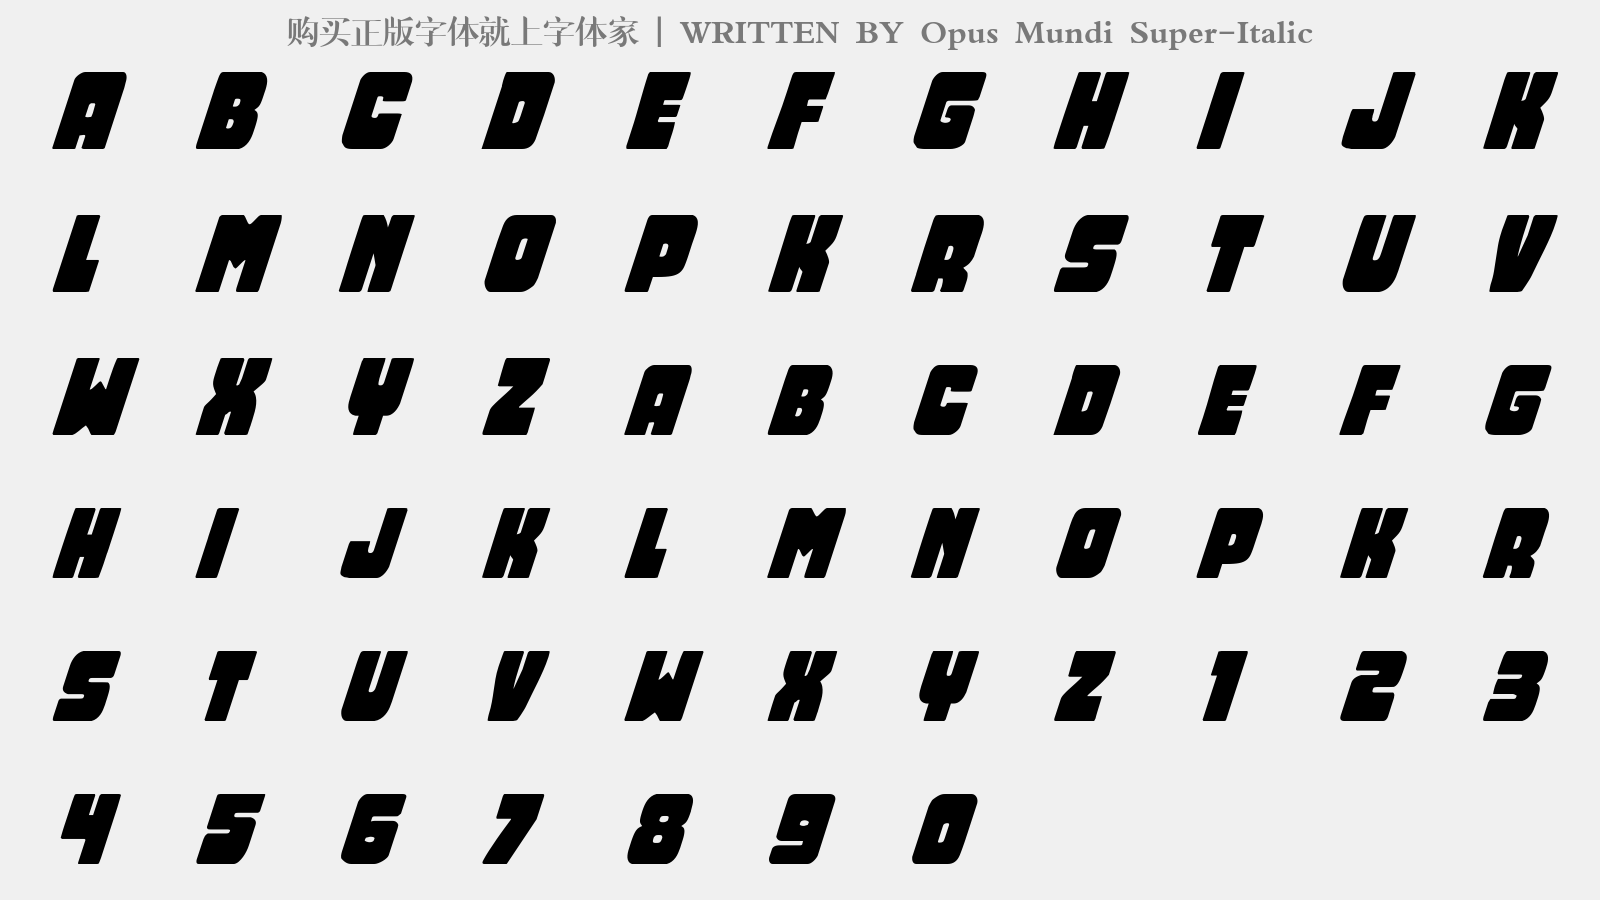 Opus Mundi Super-Italic - 大写字母/小写字母/数字